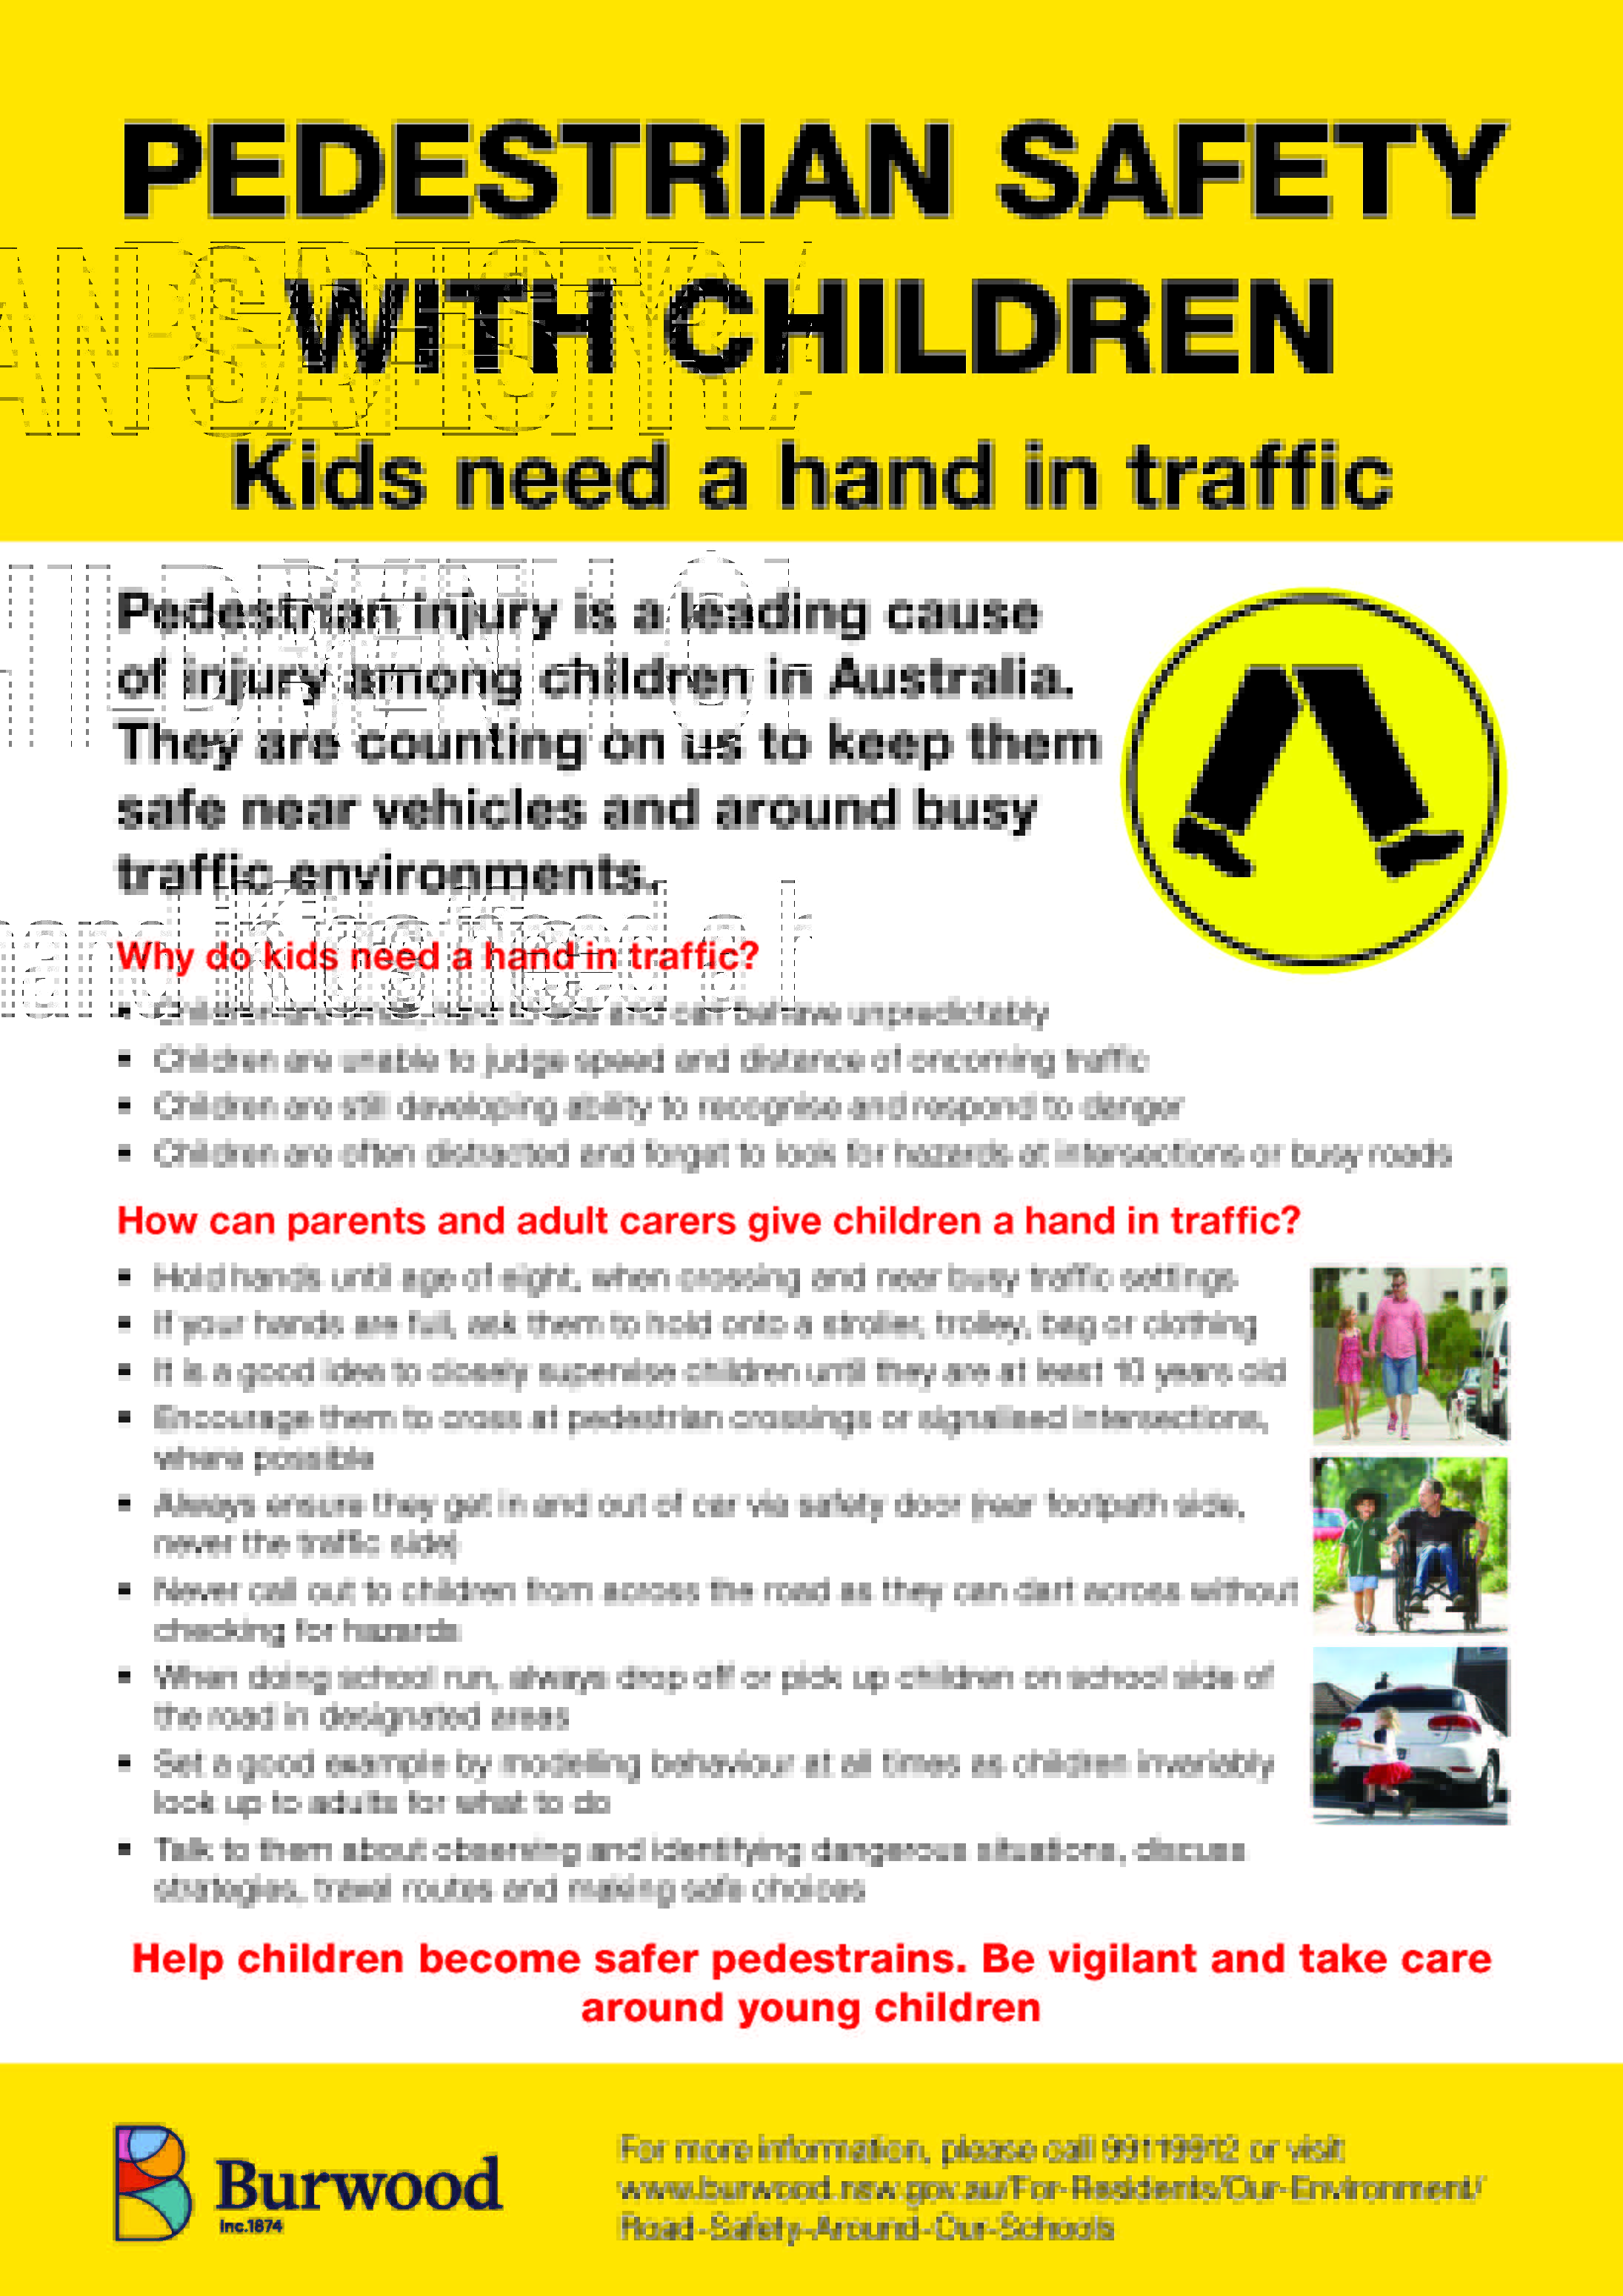 Why-Kids-need-hand-in-traffic-flyer.jpg